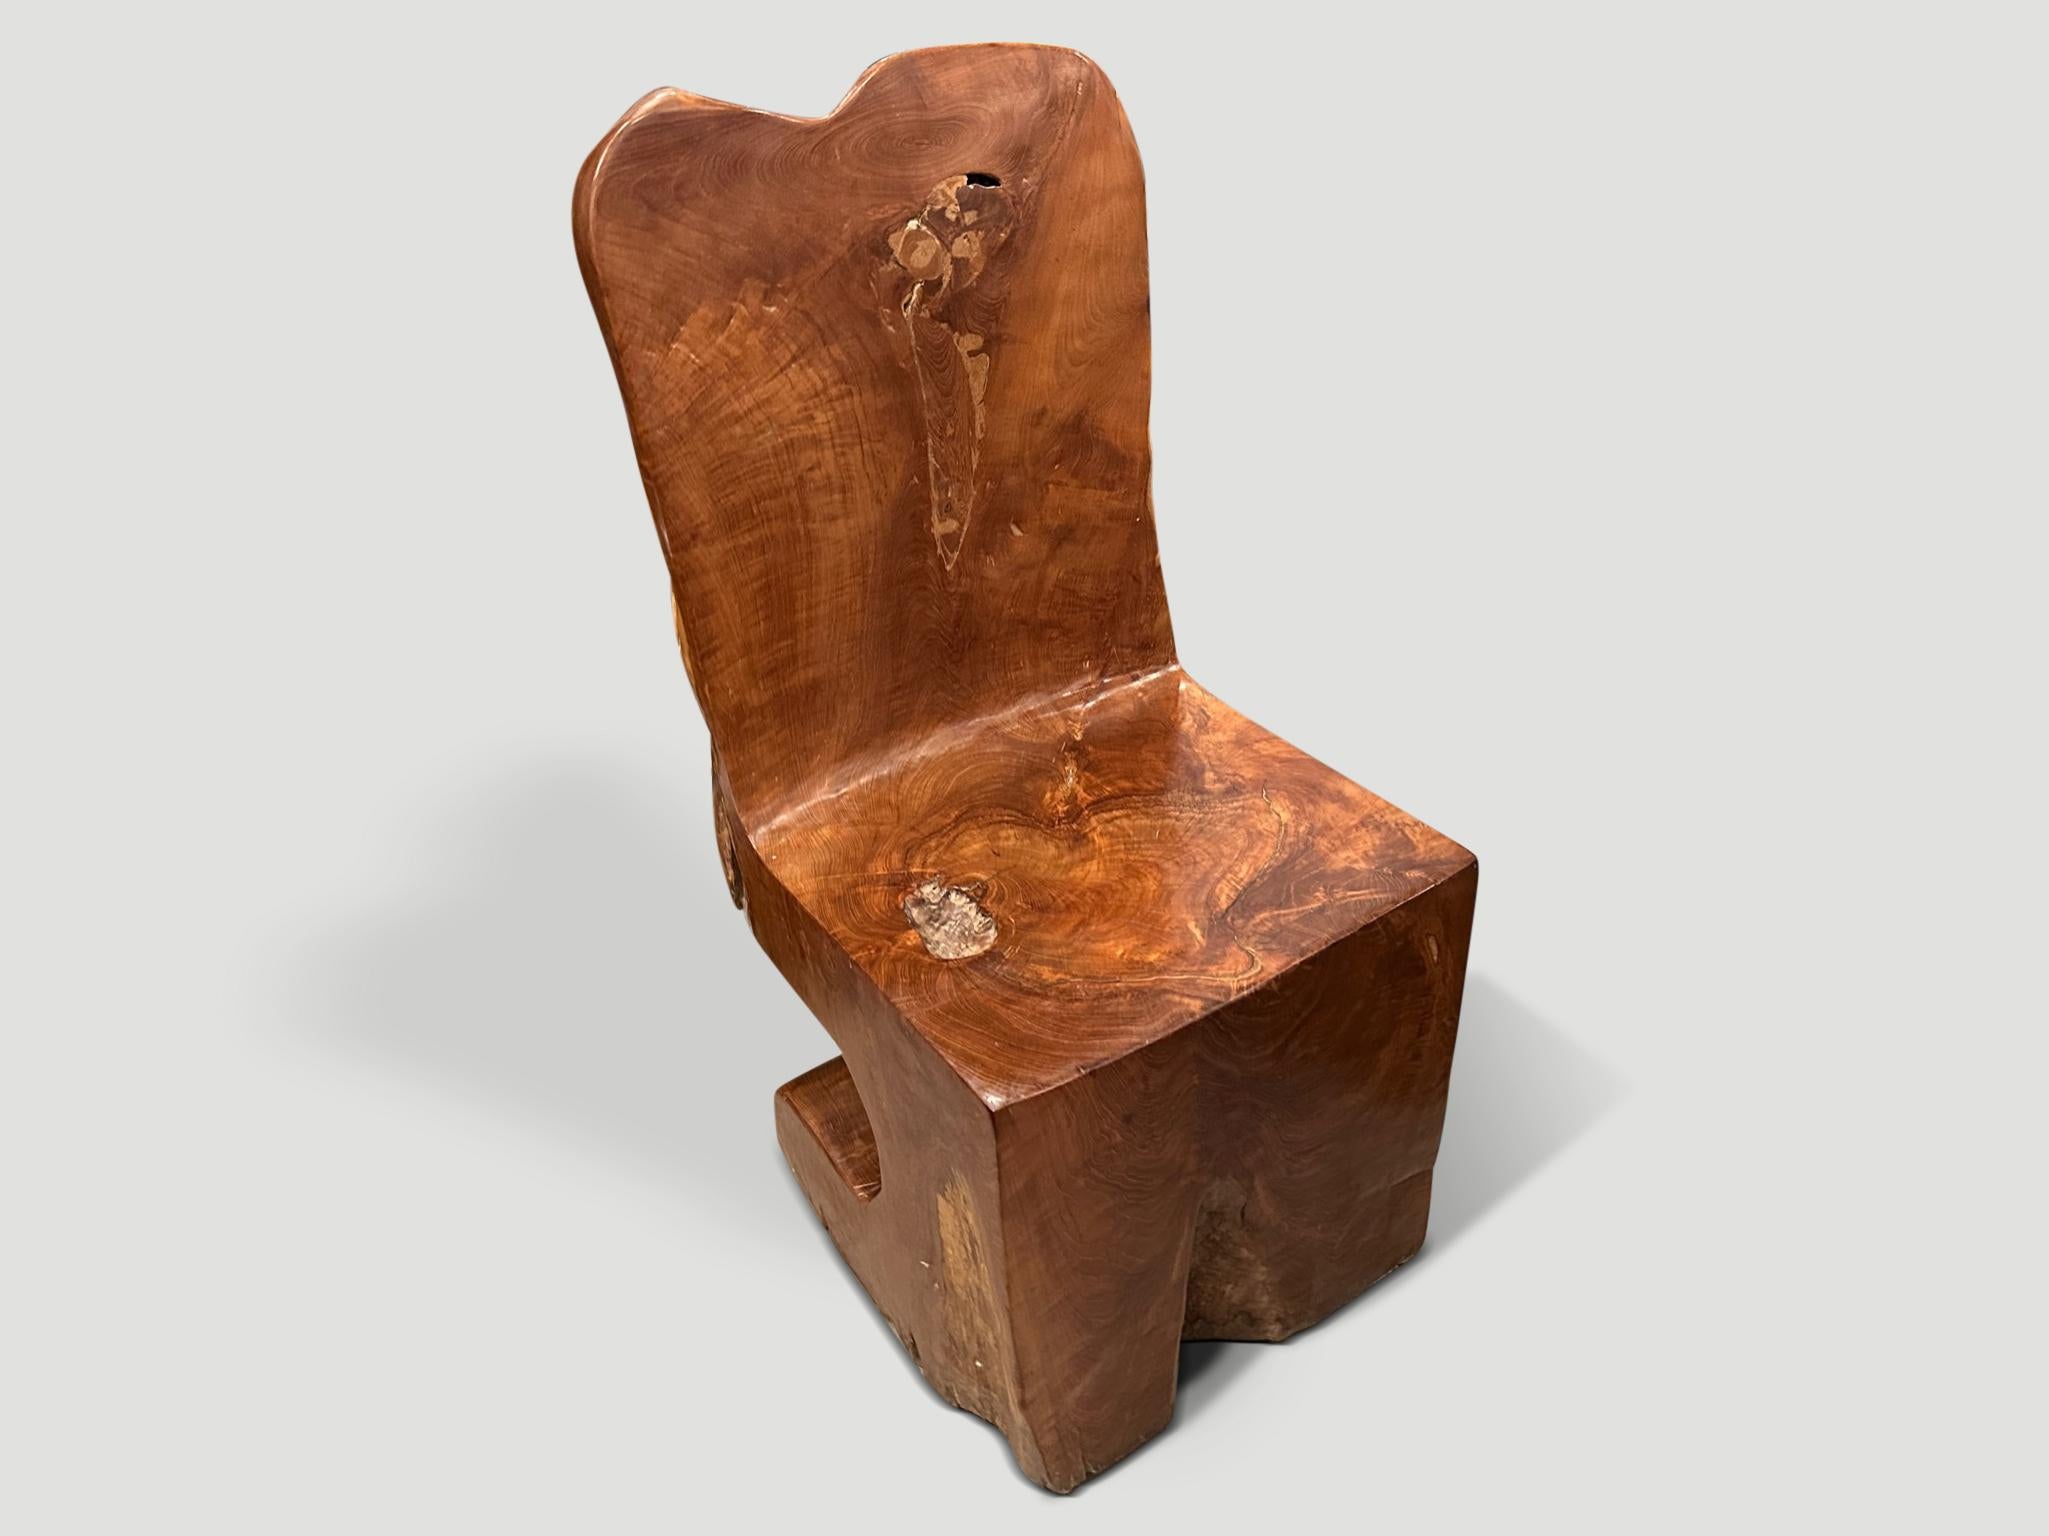 Organic Modern Andrianna Shamaris Sculptural Teak Wood Chair For Sale